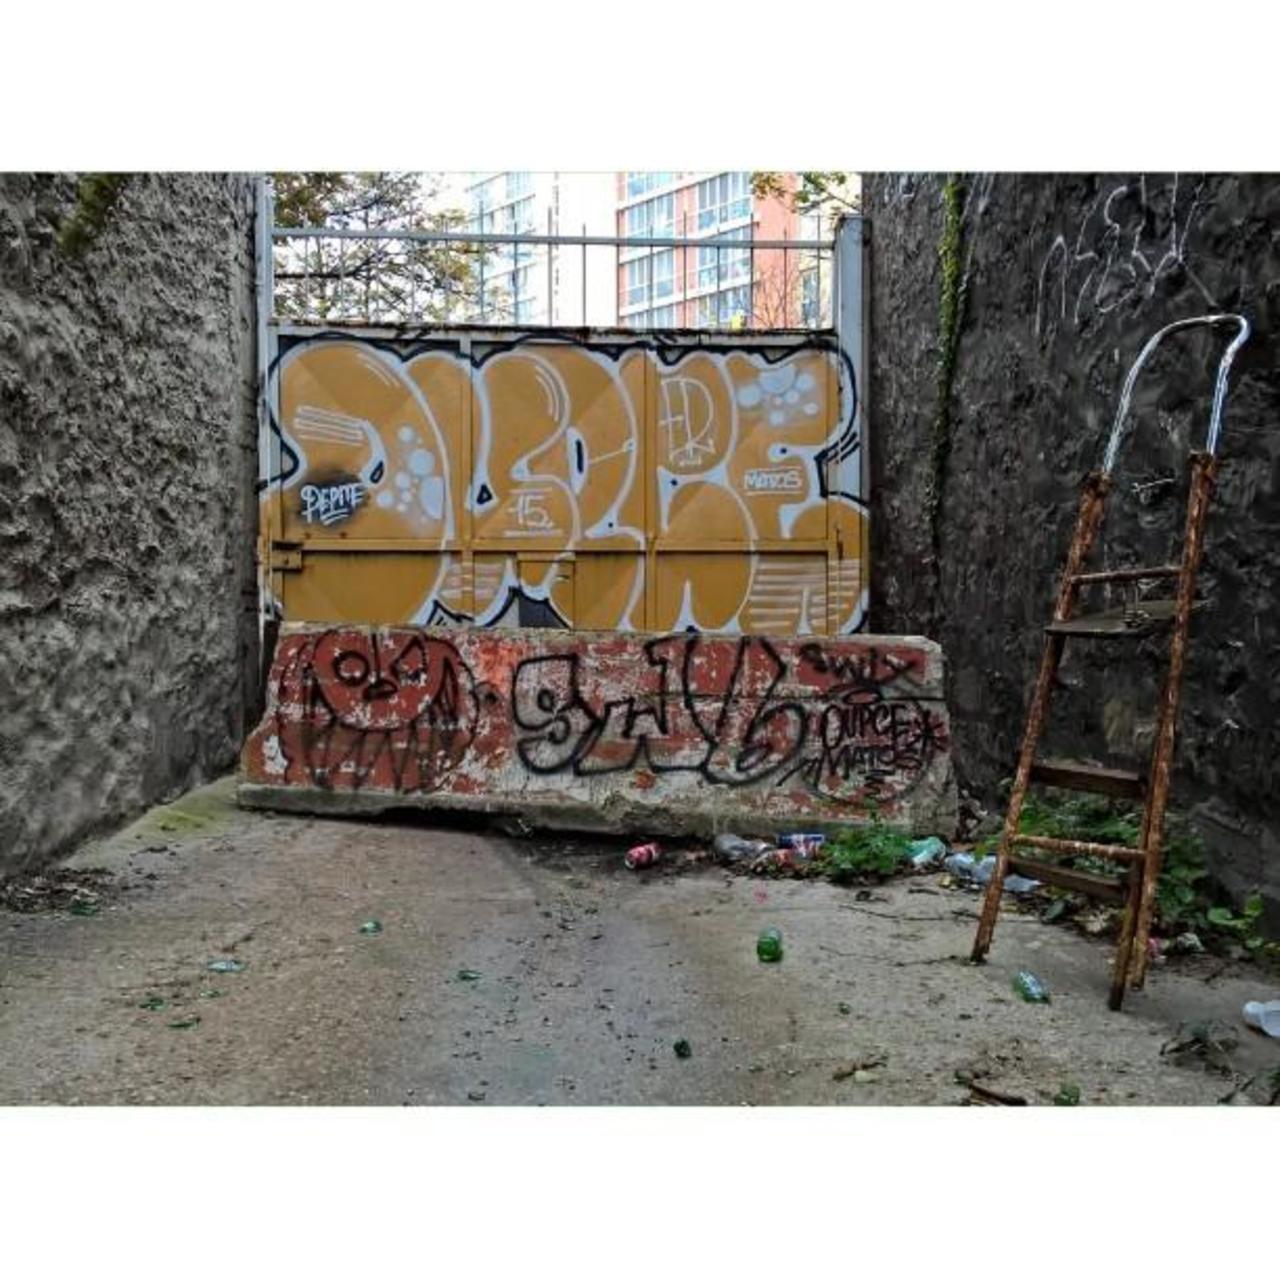 OUPCE
#streetart #graffiti #graff #art #fatcap #bombing #sprayart #spraycanart #wallart #handstyle #lettering #urba… http://t.co/0xgzzGSHbu